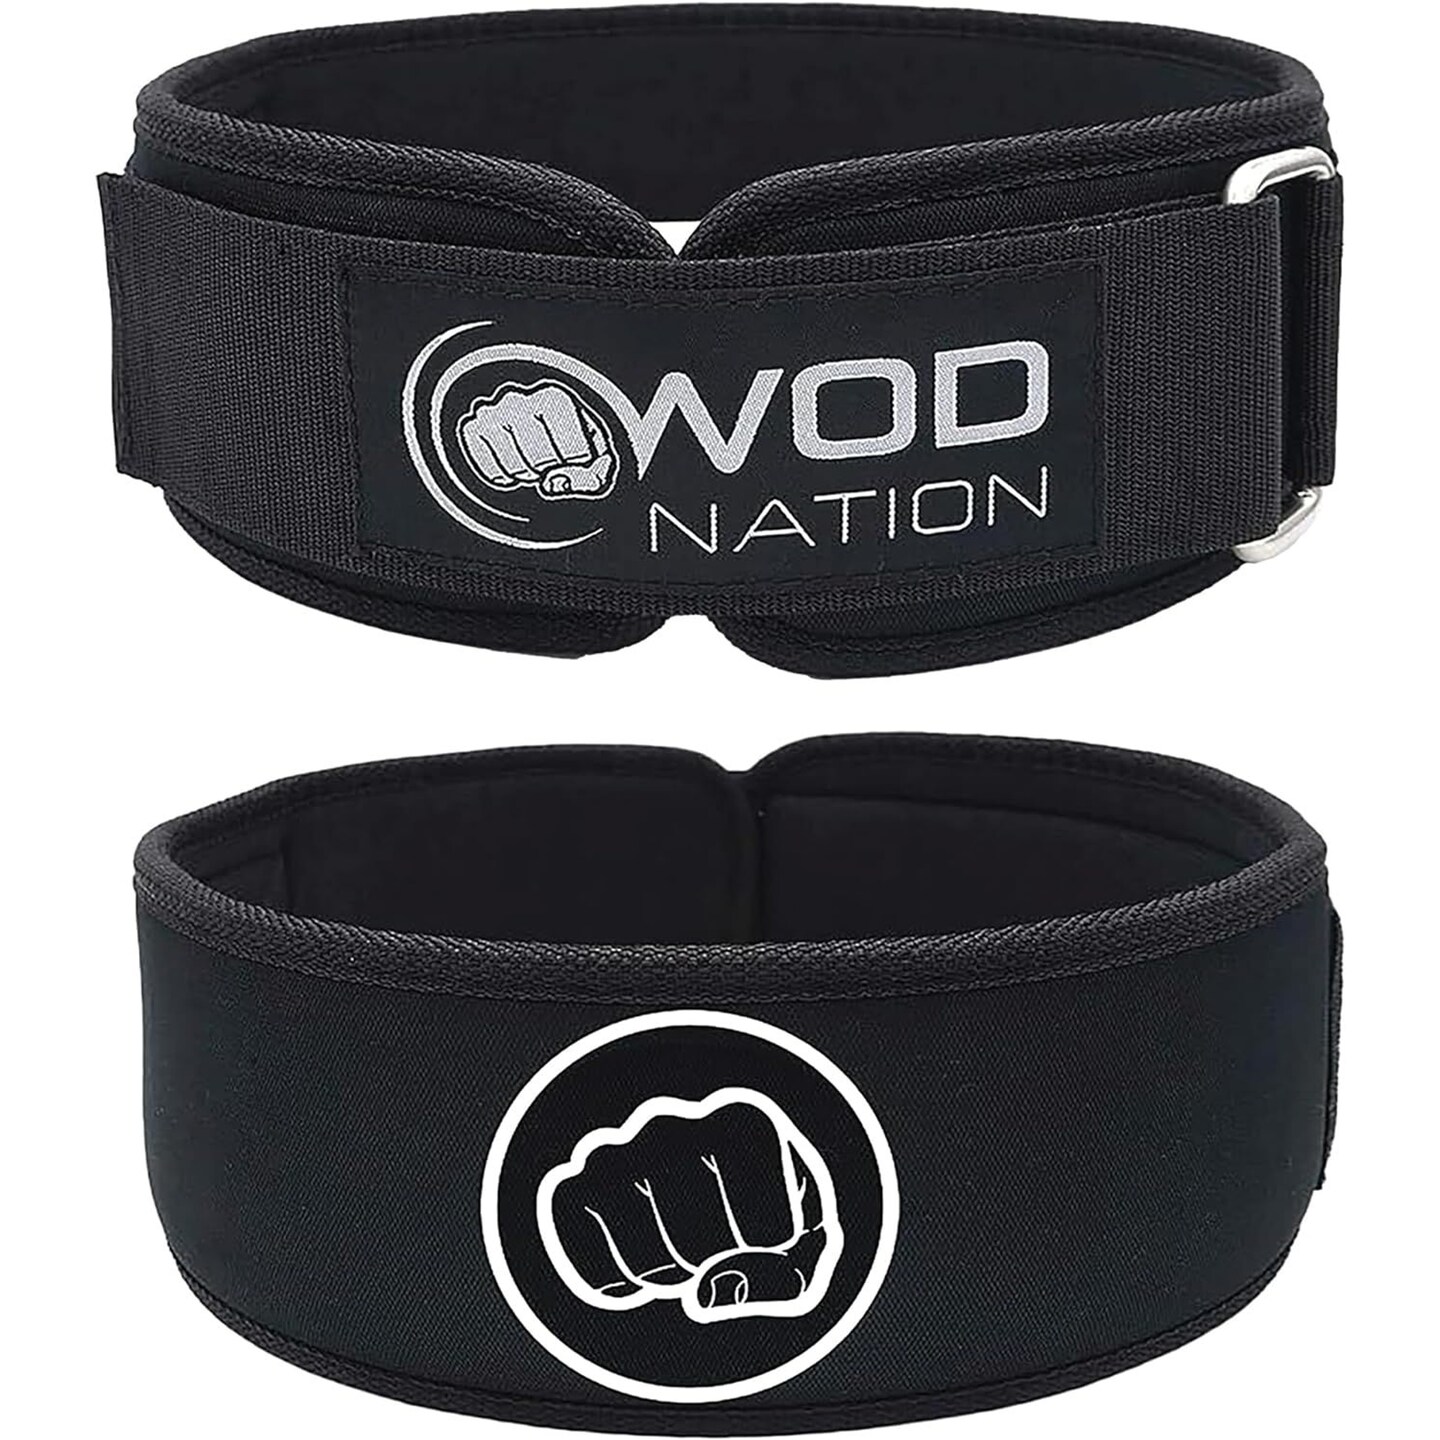 WOD Nation 4 Inch PRO Weight Lifting Belt For Men &#x26; Women (Medium: 32in - 35in Waist) - Firm Support Nylon Weight Belt for Deadlift, Squat &#x26; Weightlifting - Gym Belt Sizes for Both Men &#x26; Women